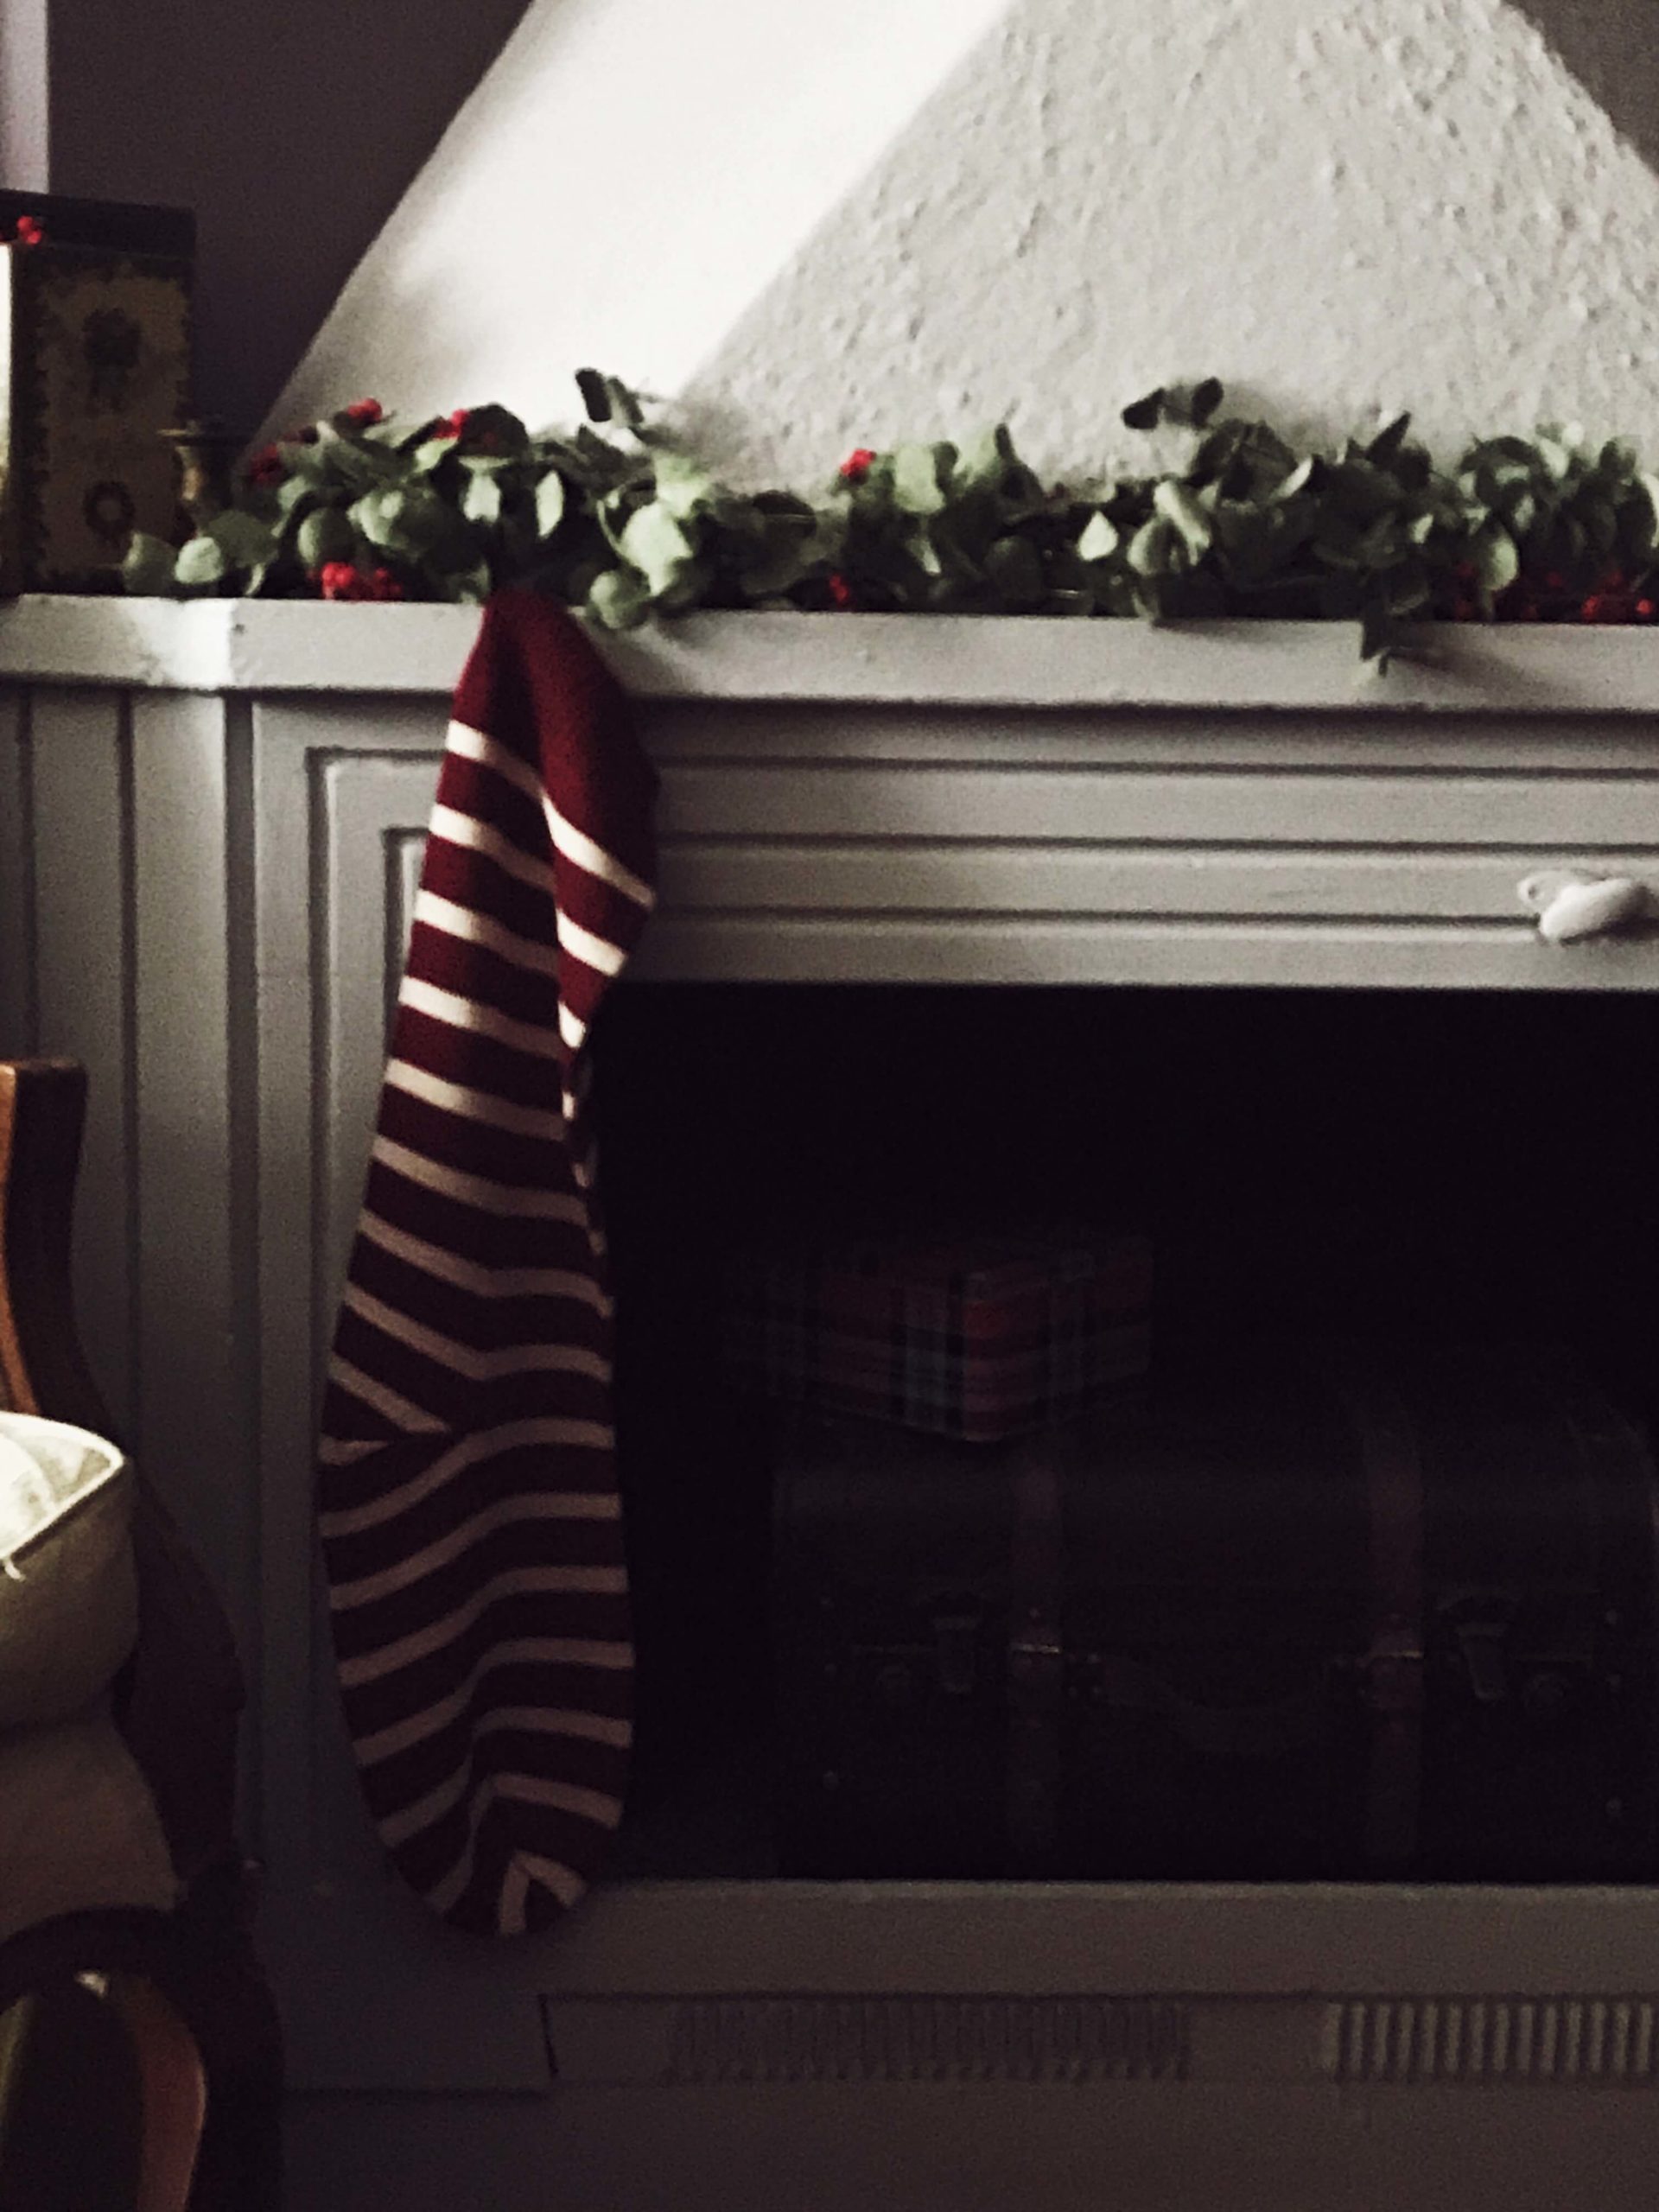 Christmas stocking hanging near the fireplace